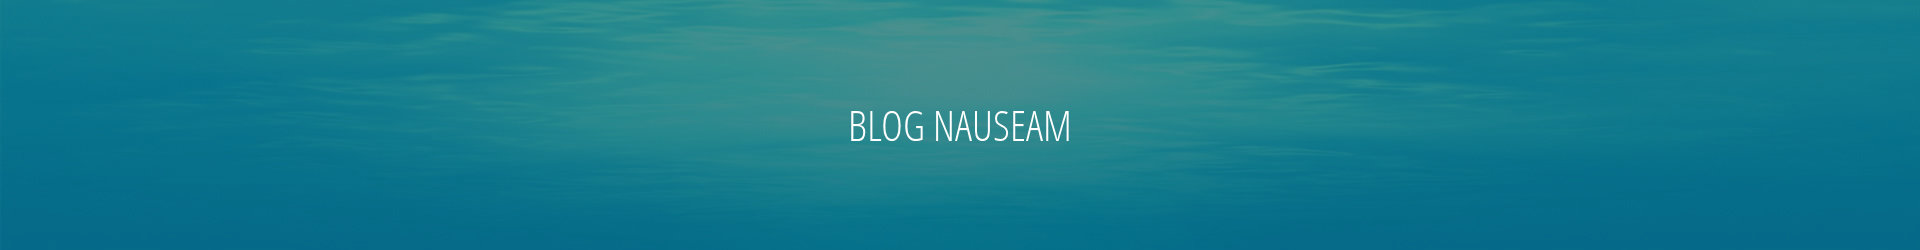 Tag: <span>blog nauseam</span>